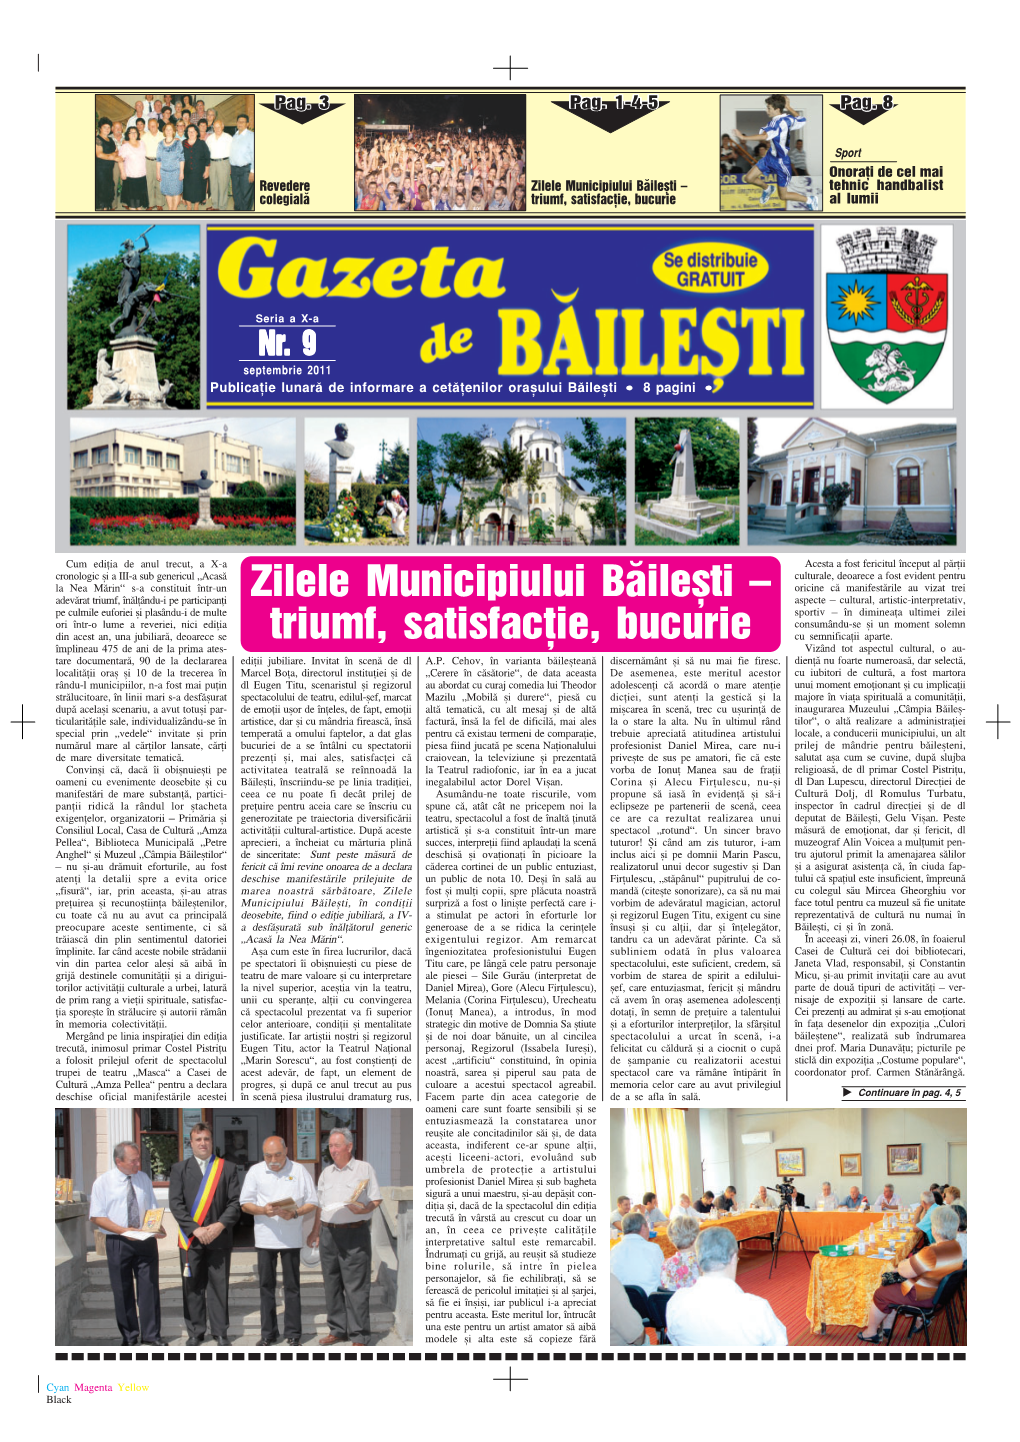 Gazeta Bailesti SEPTEMBRIE 2011.PM6